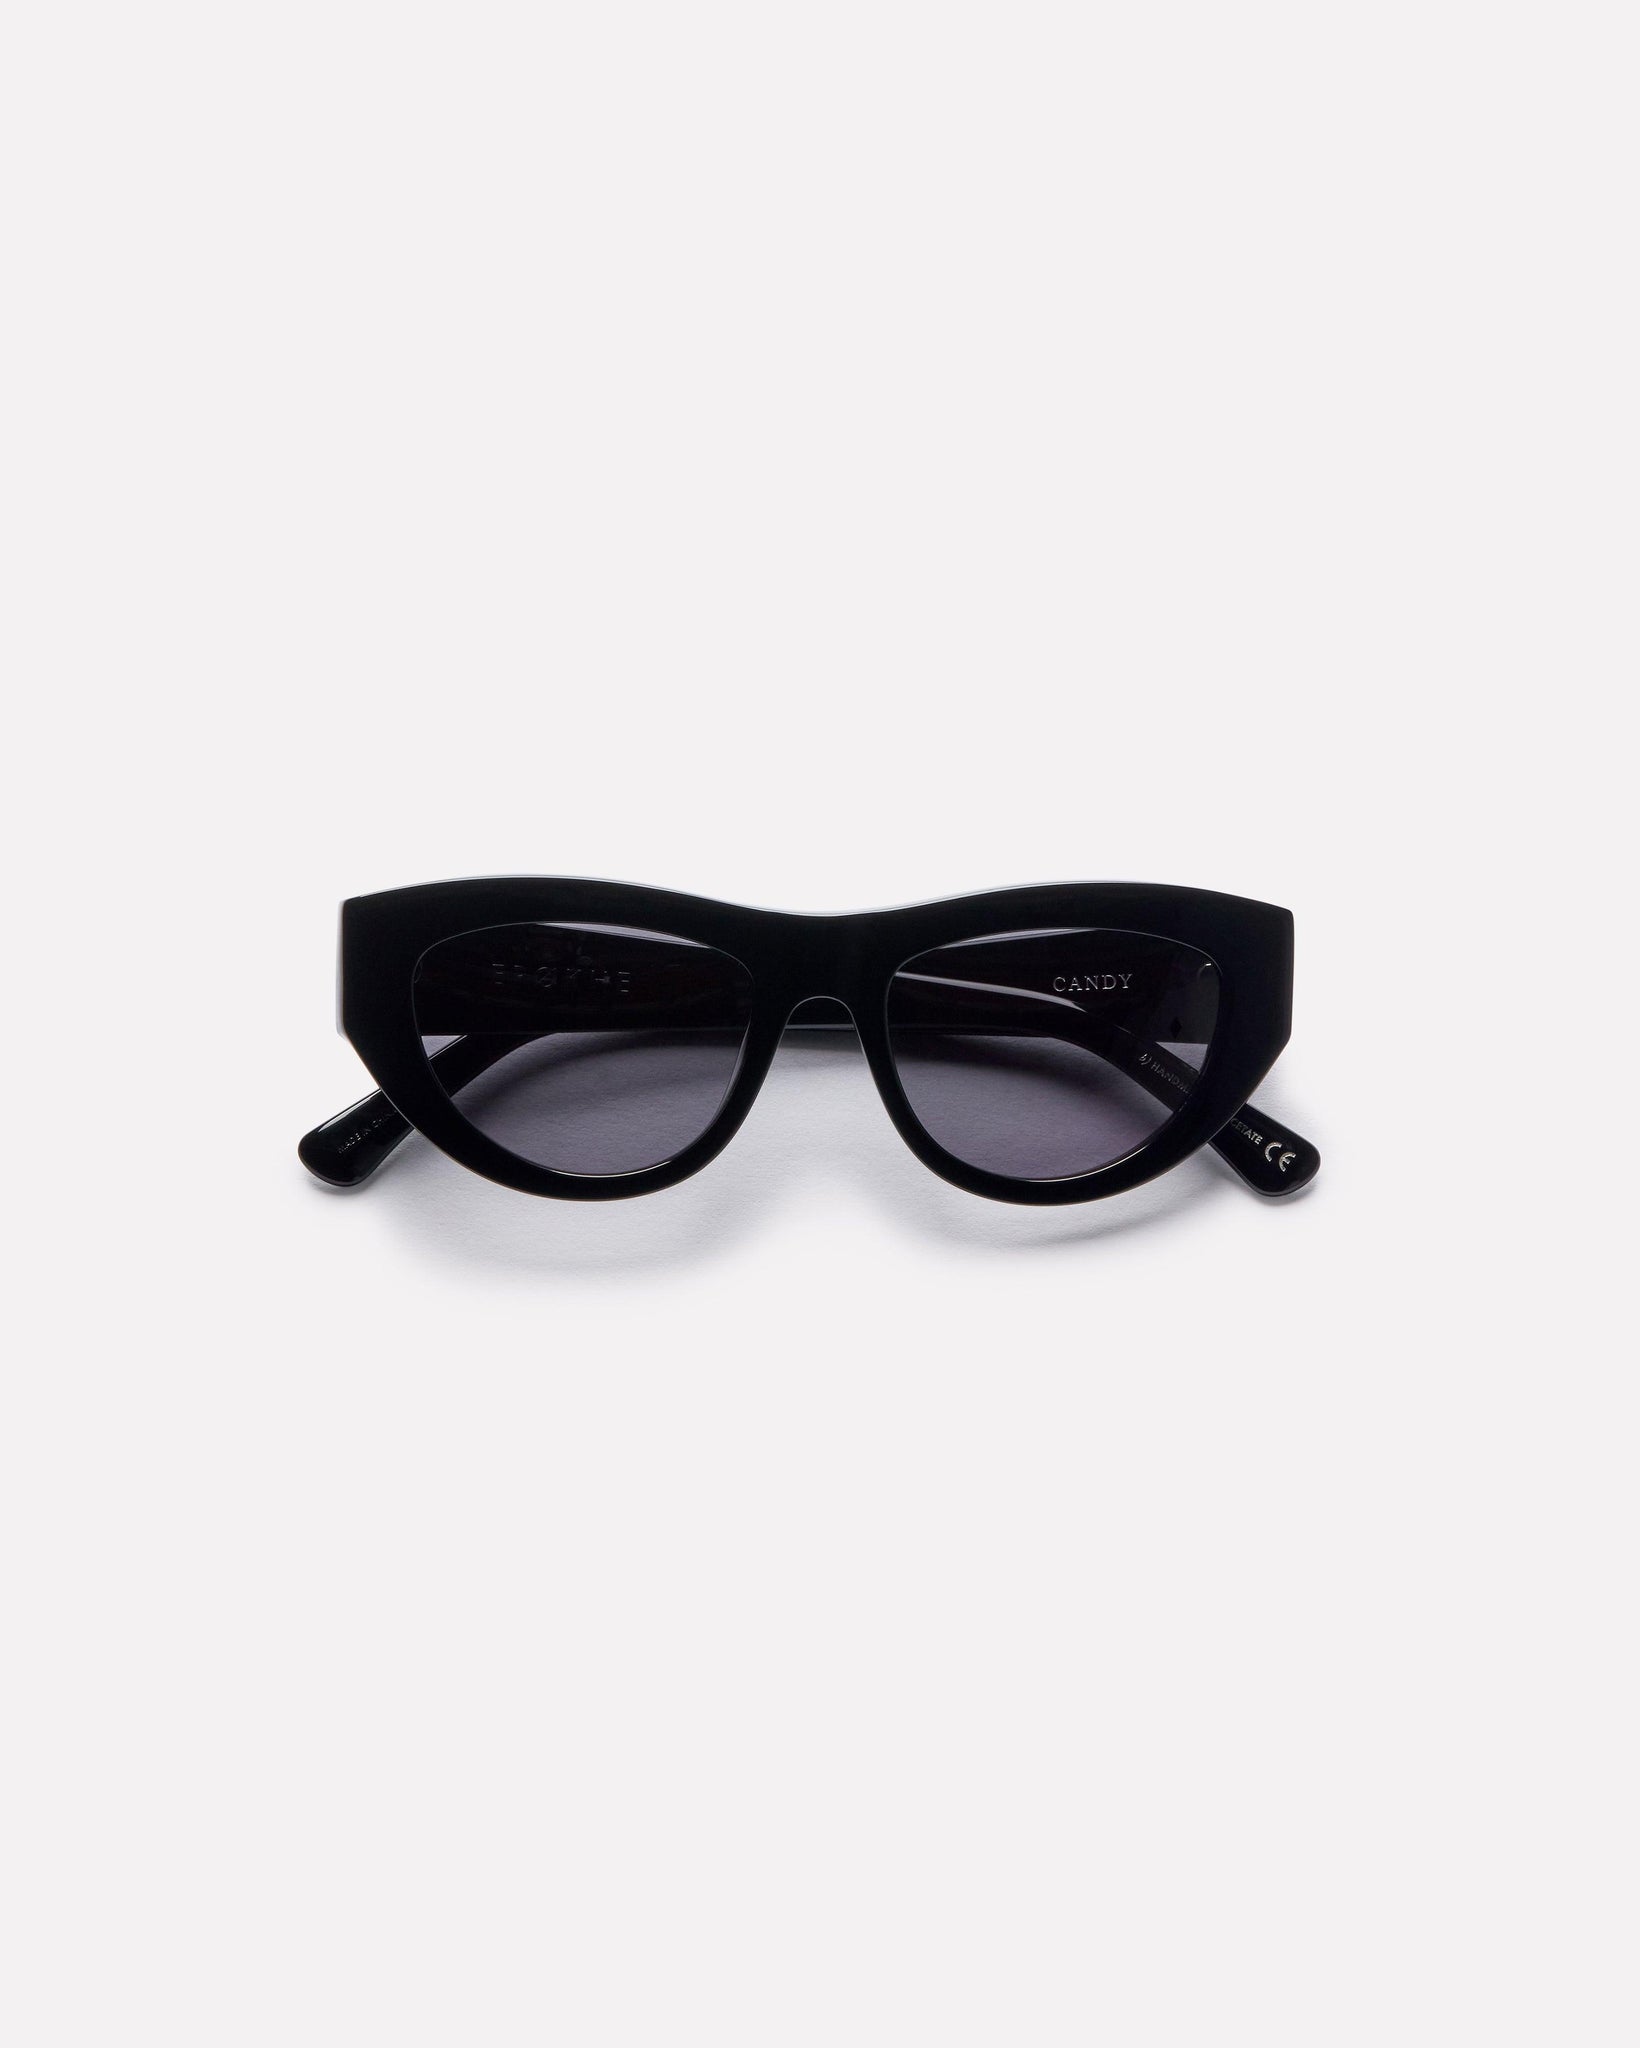 Candy - Black Gloss / Black - Sunglasses - EPOKHE EYEWEAR